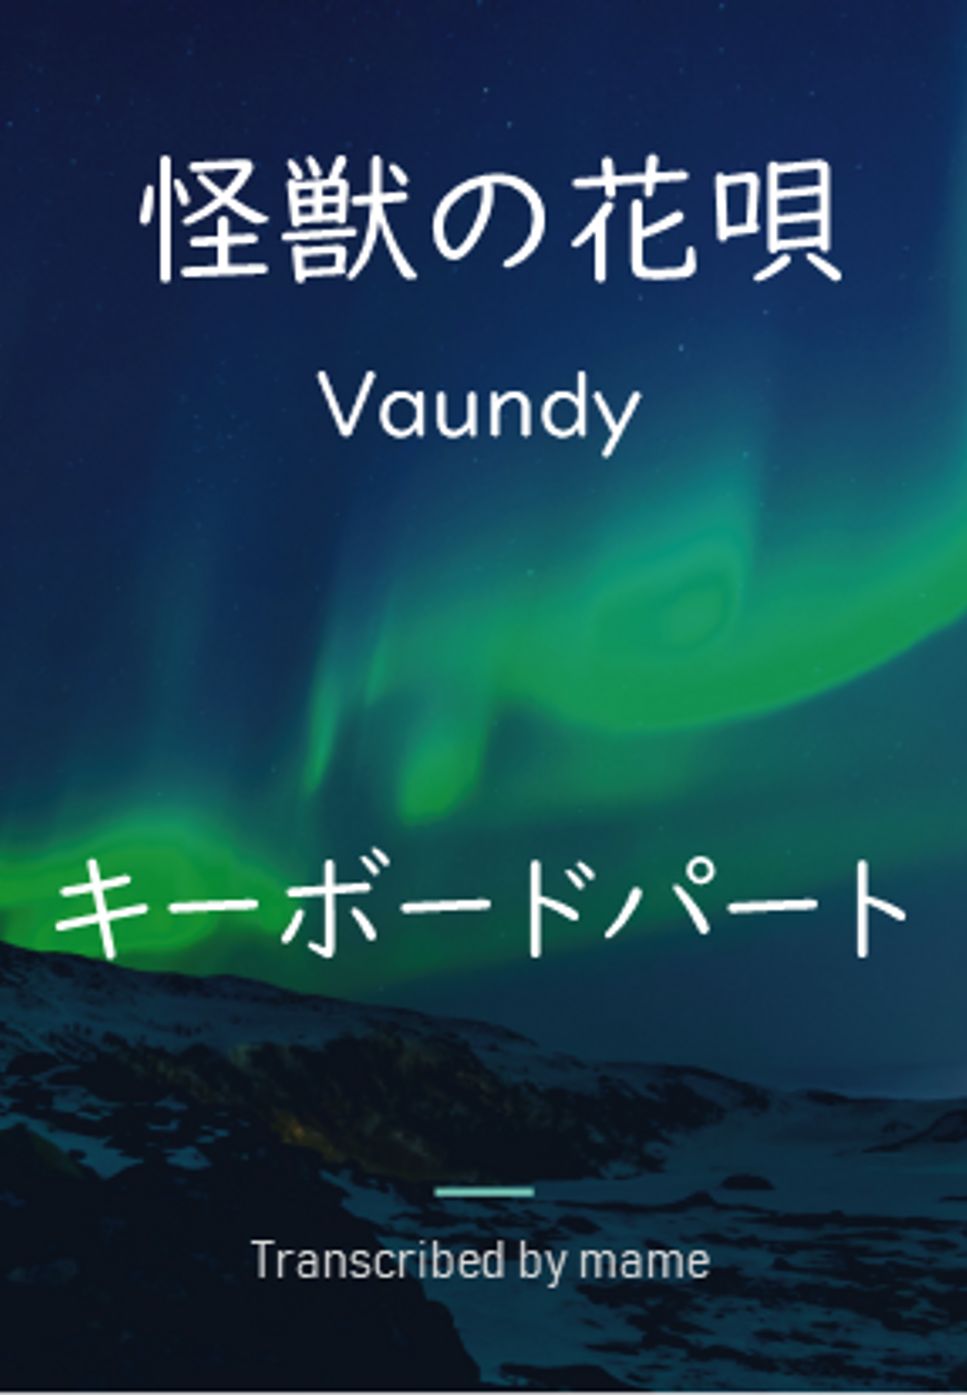 Vaundy - 怪獣の花唄 (キーボードパート) by mame